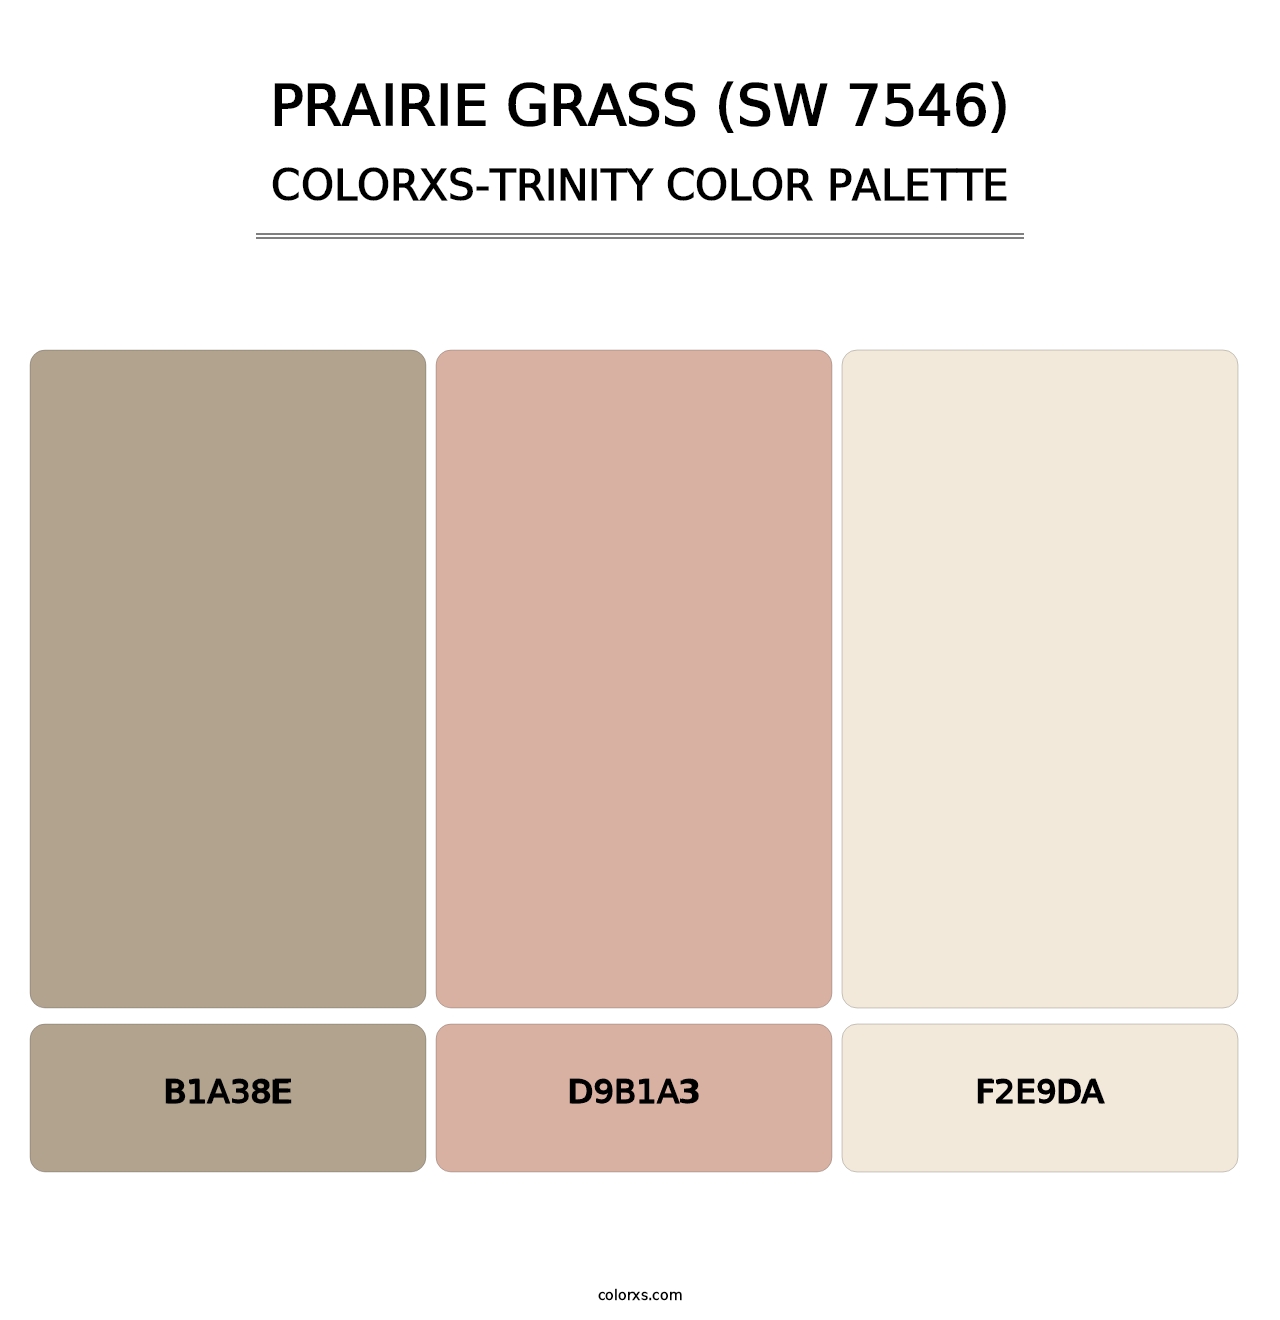 Prairie Grass (SW 7546) - Colorxs Trinity Palette